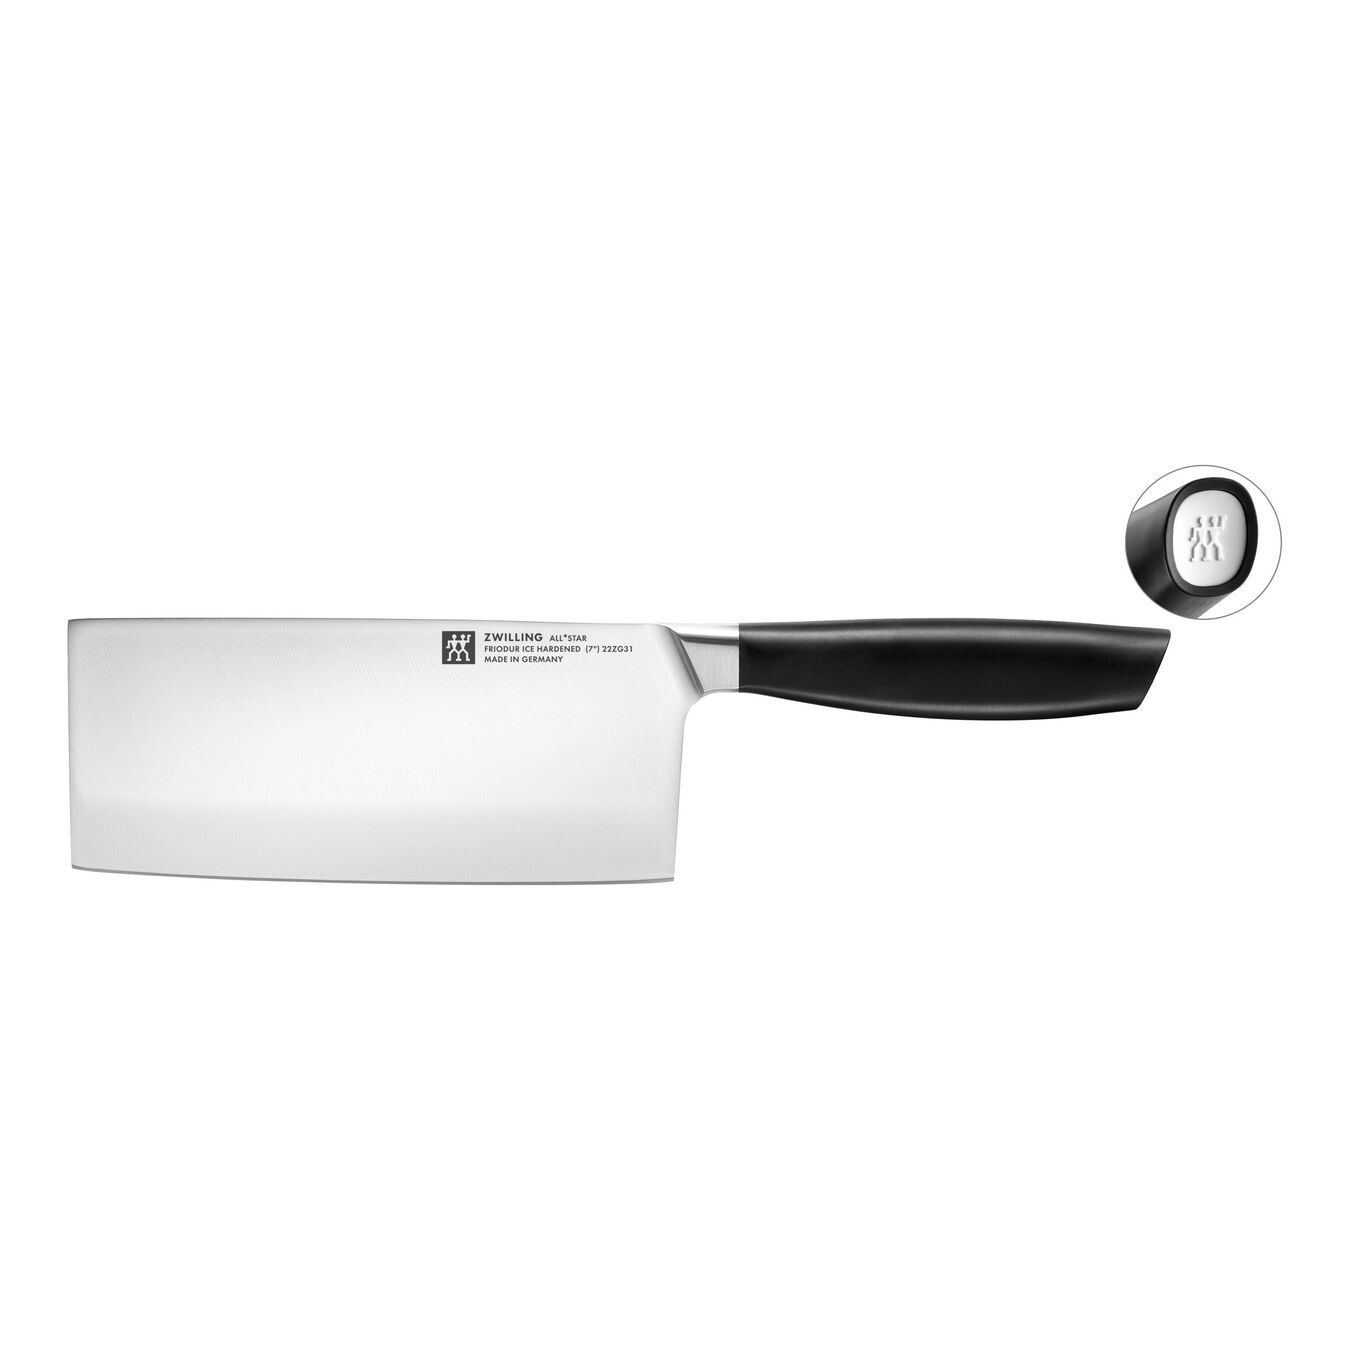 Kinesisk kokkekniv 18 cm, Hvid,,large 1